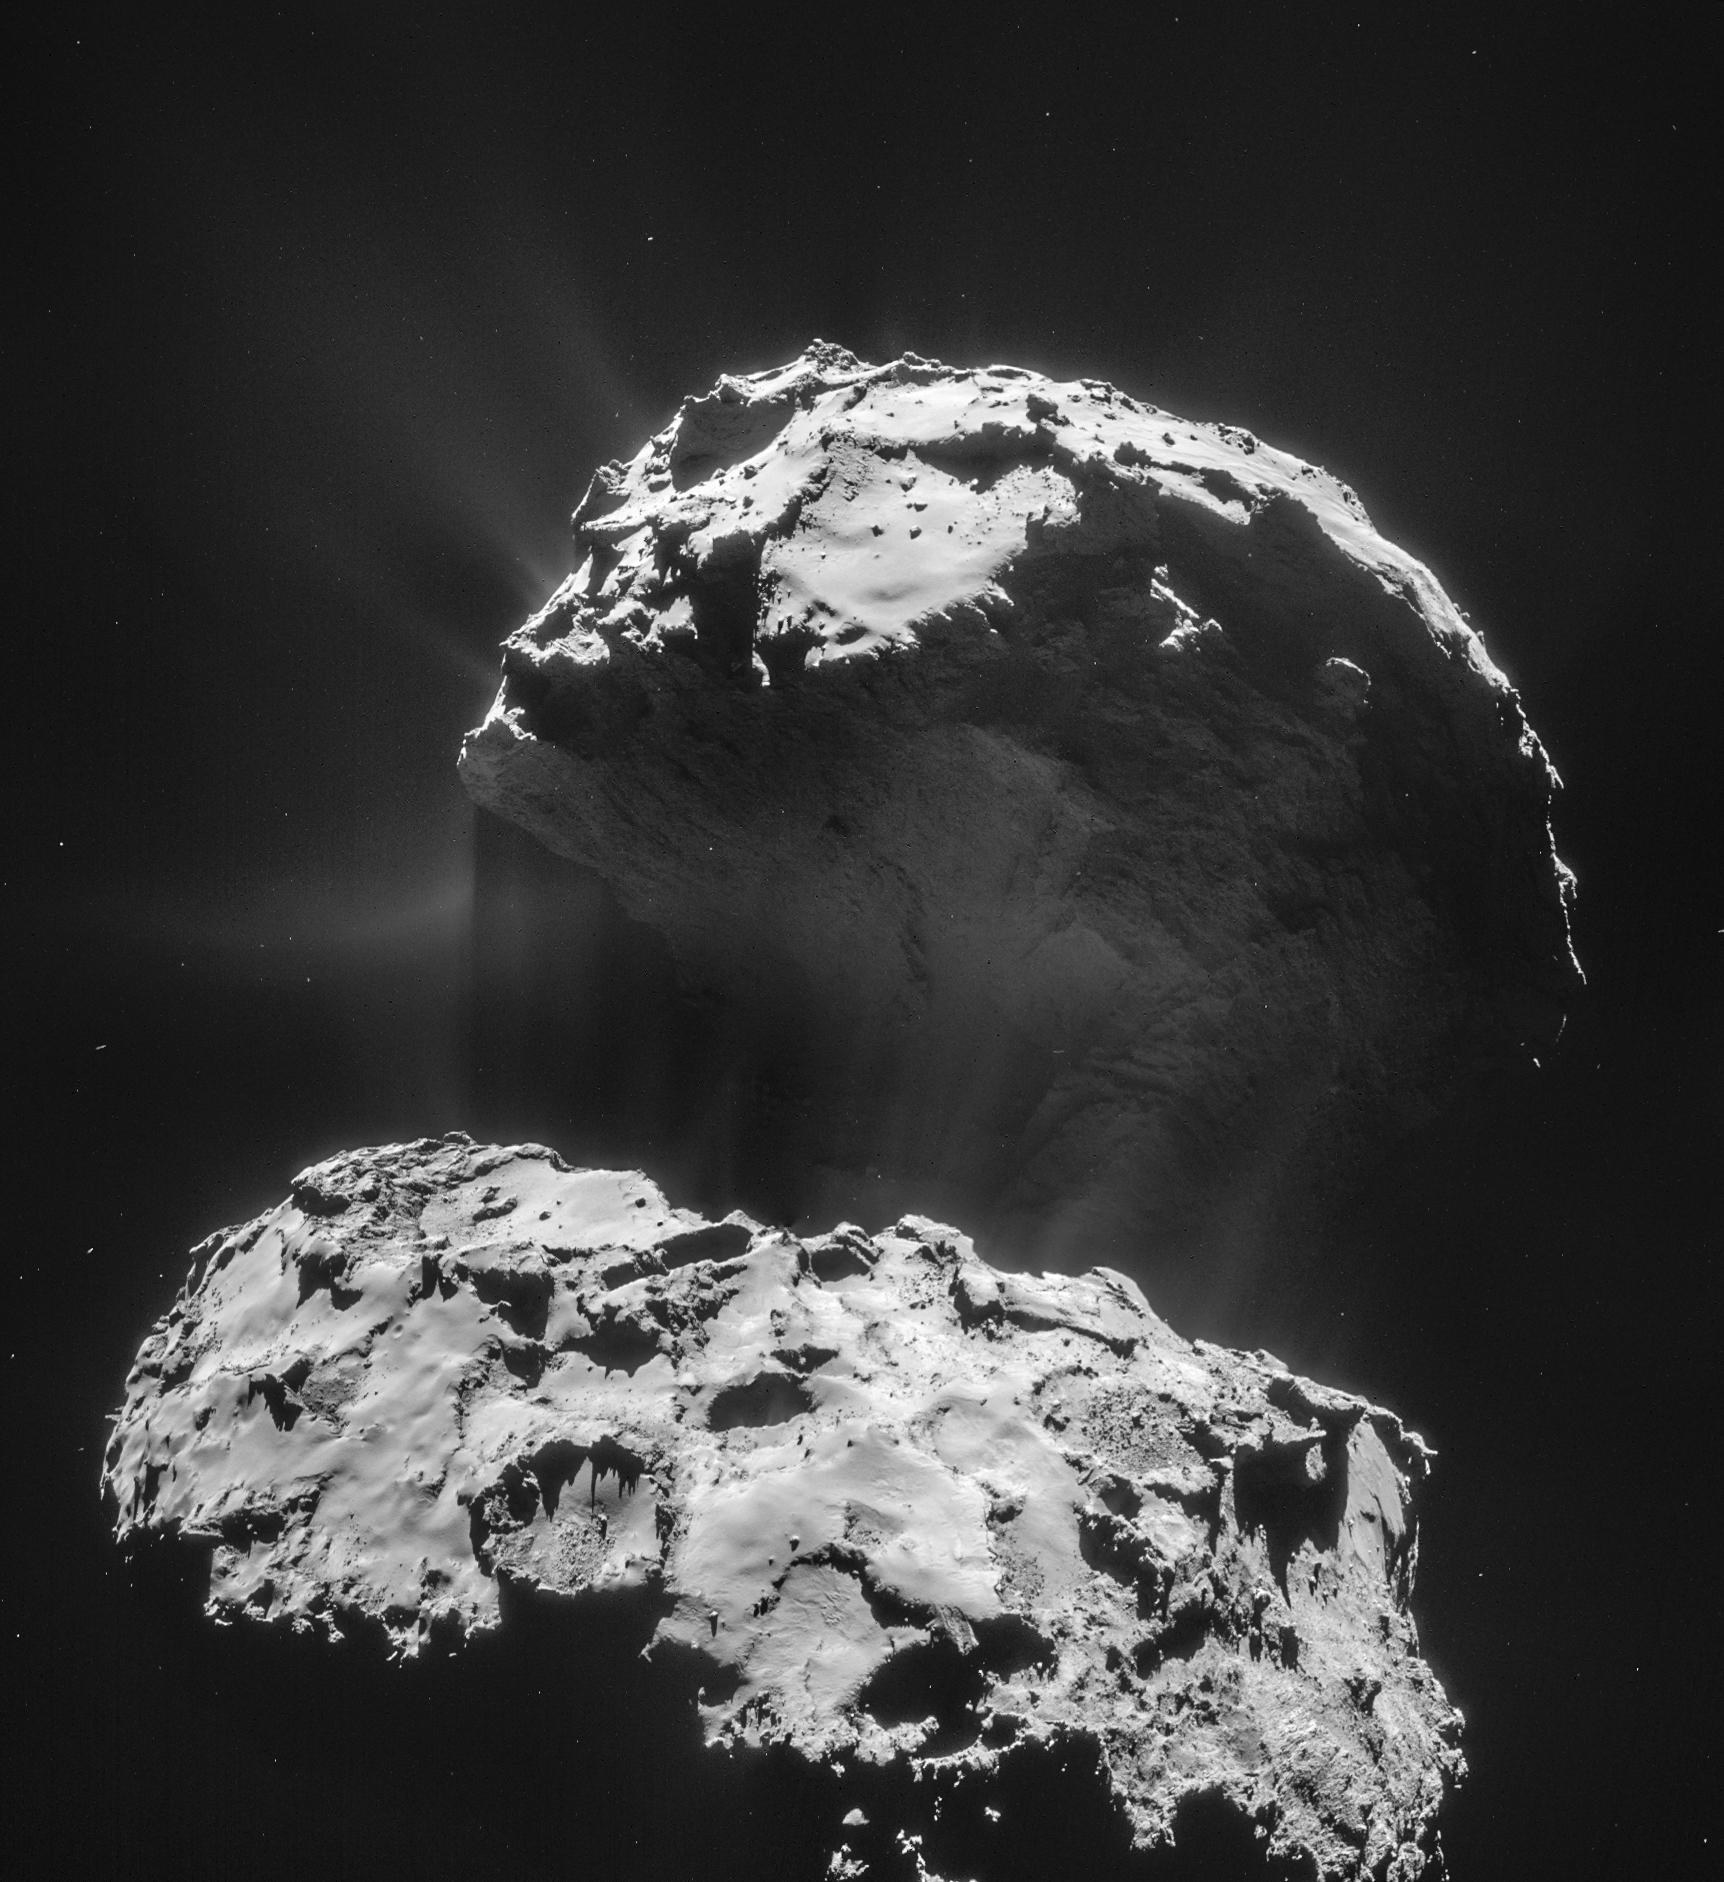 Comet on 3 February 2015